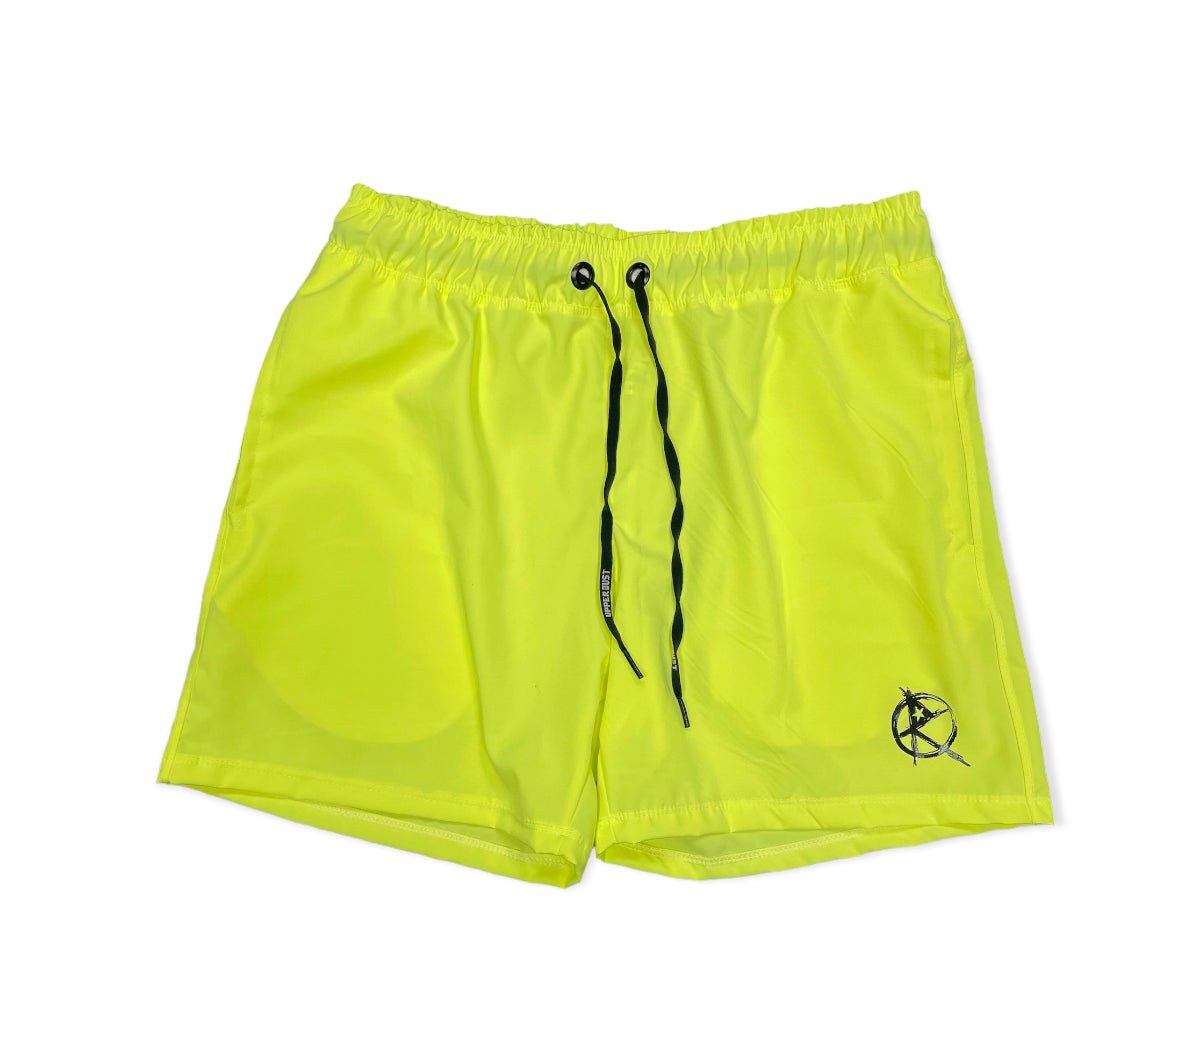 Neon Yellow (short) Men's Shorts